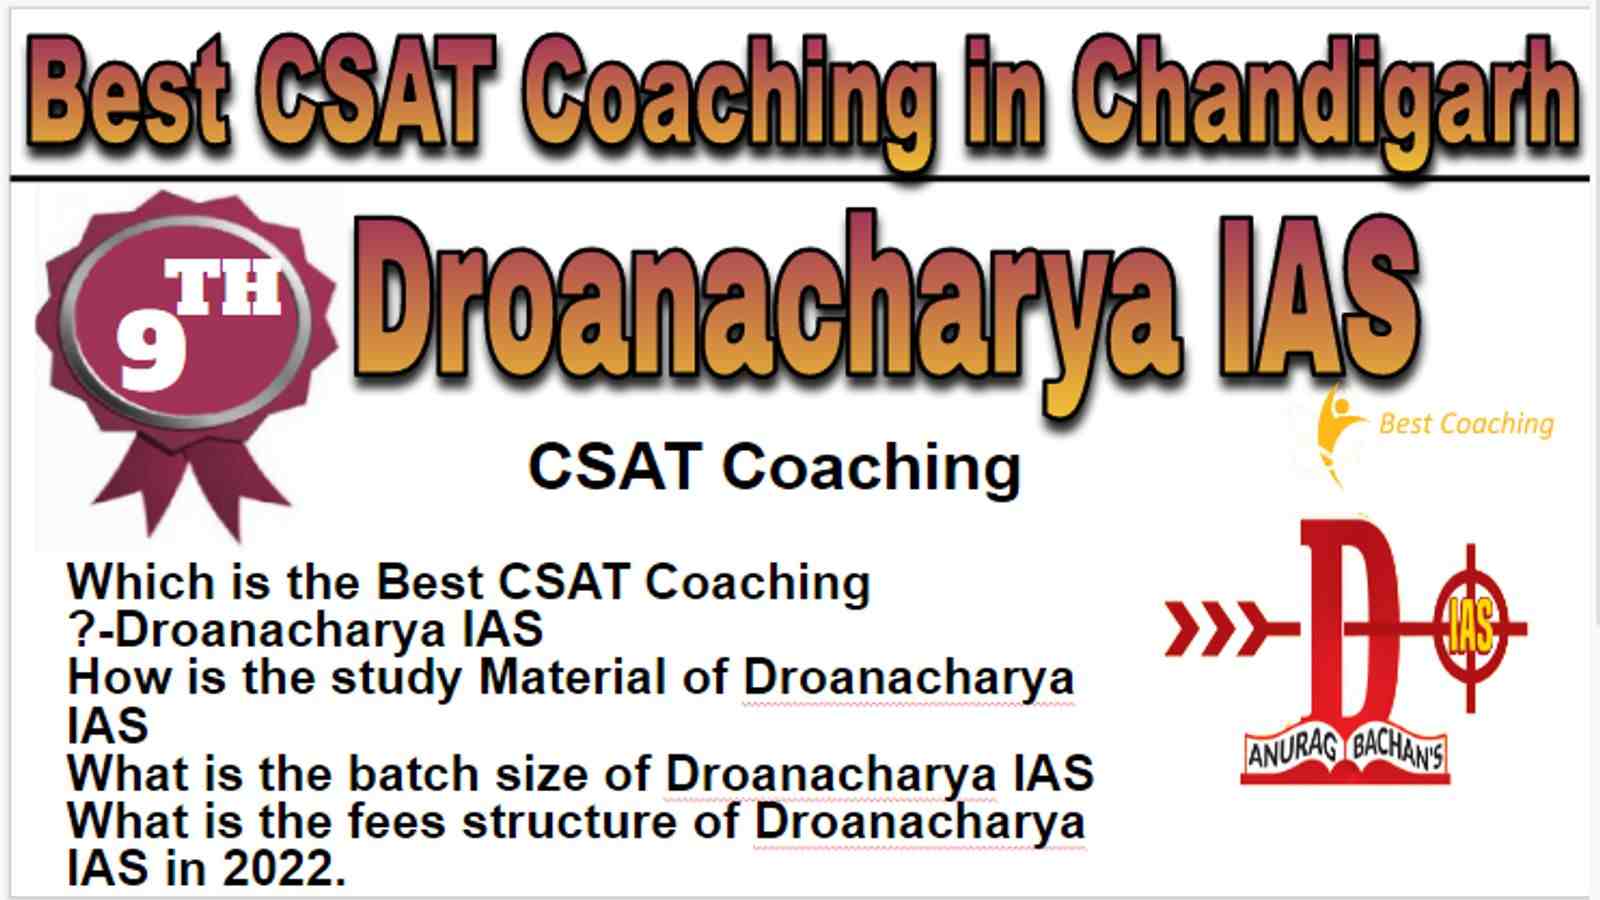 Rank 9 Best CSAT Coaching in Chandigarh